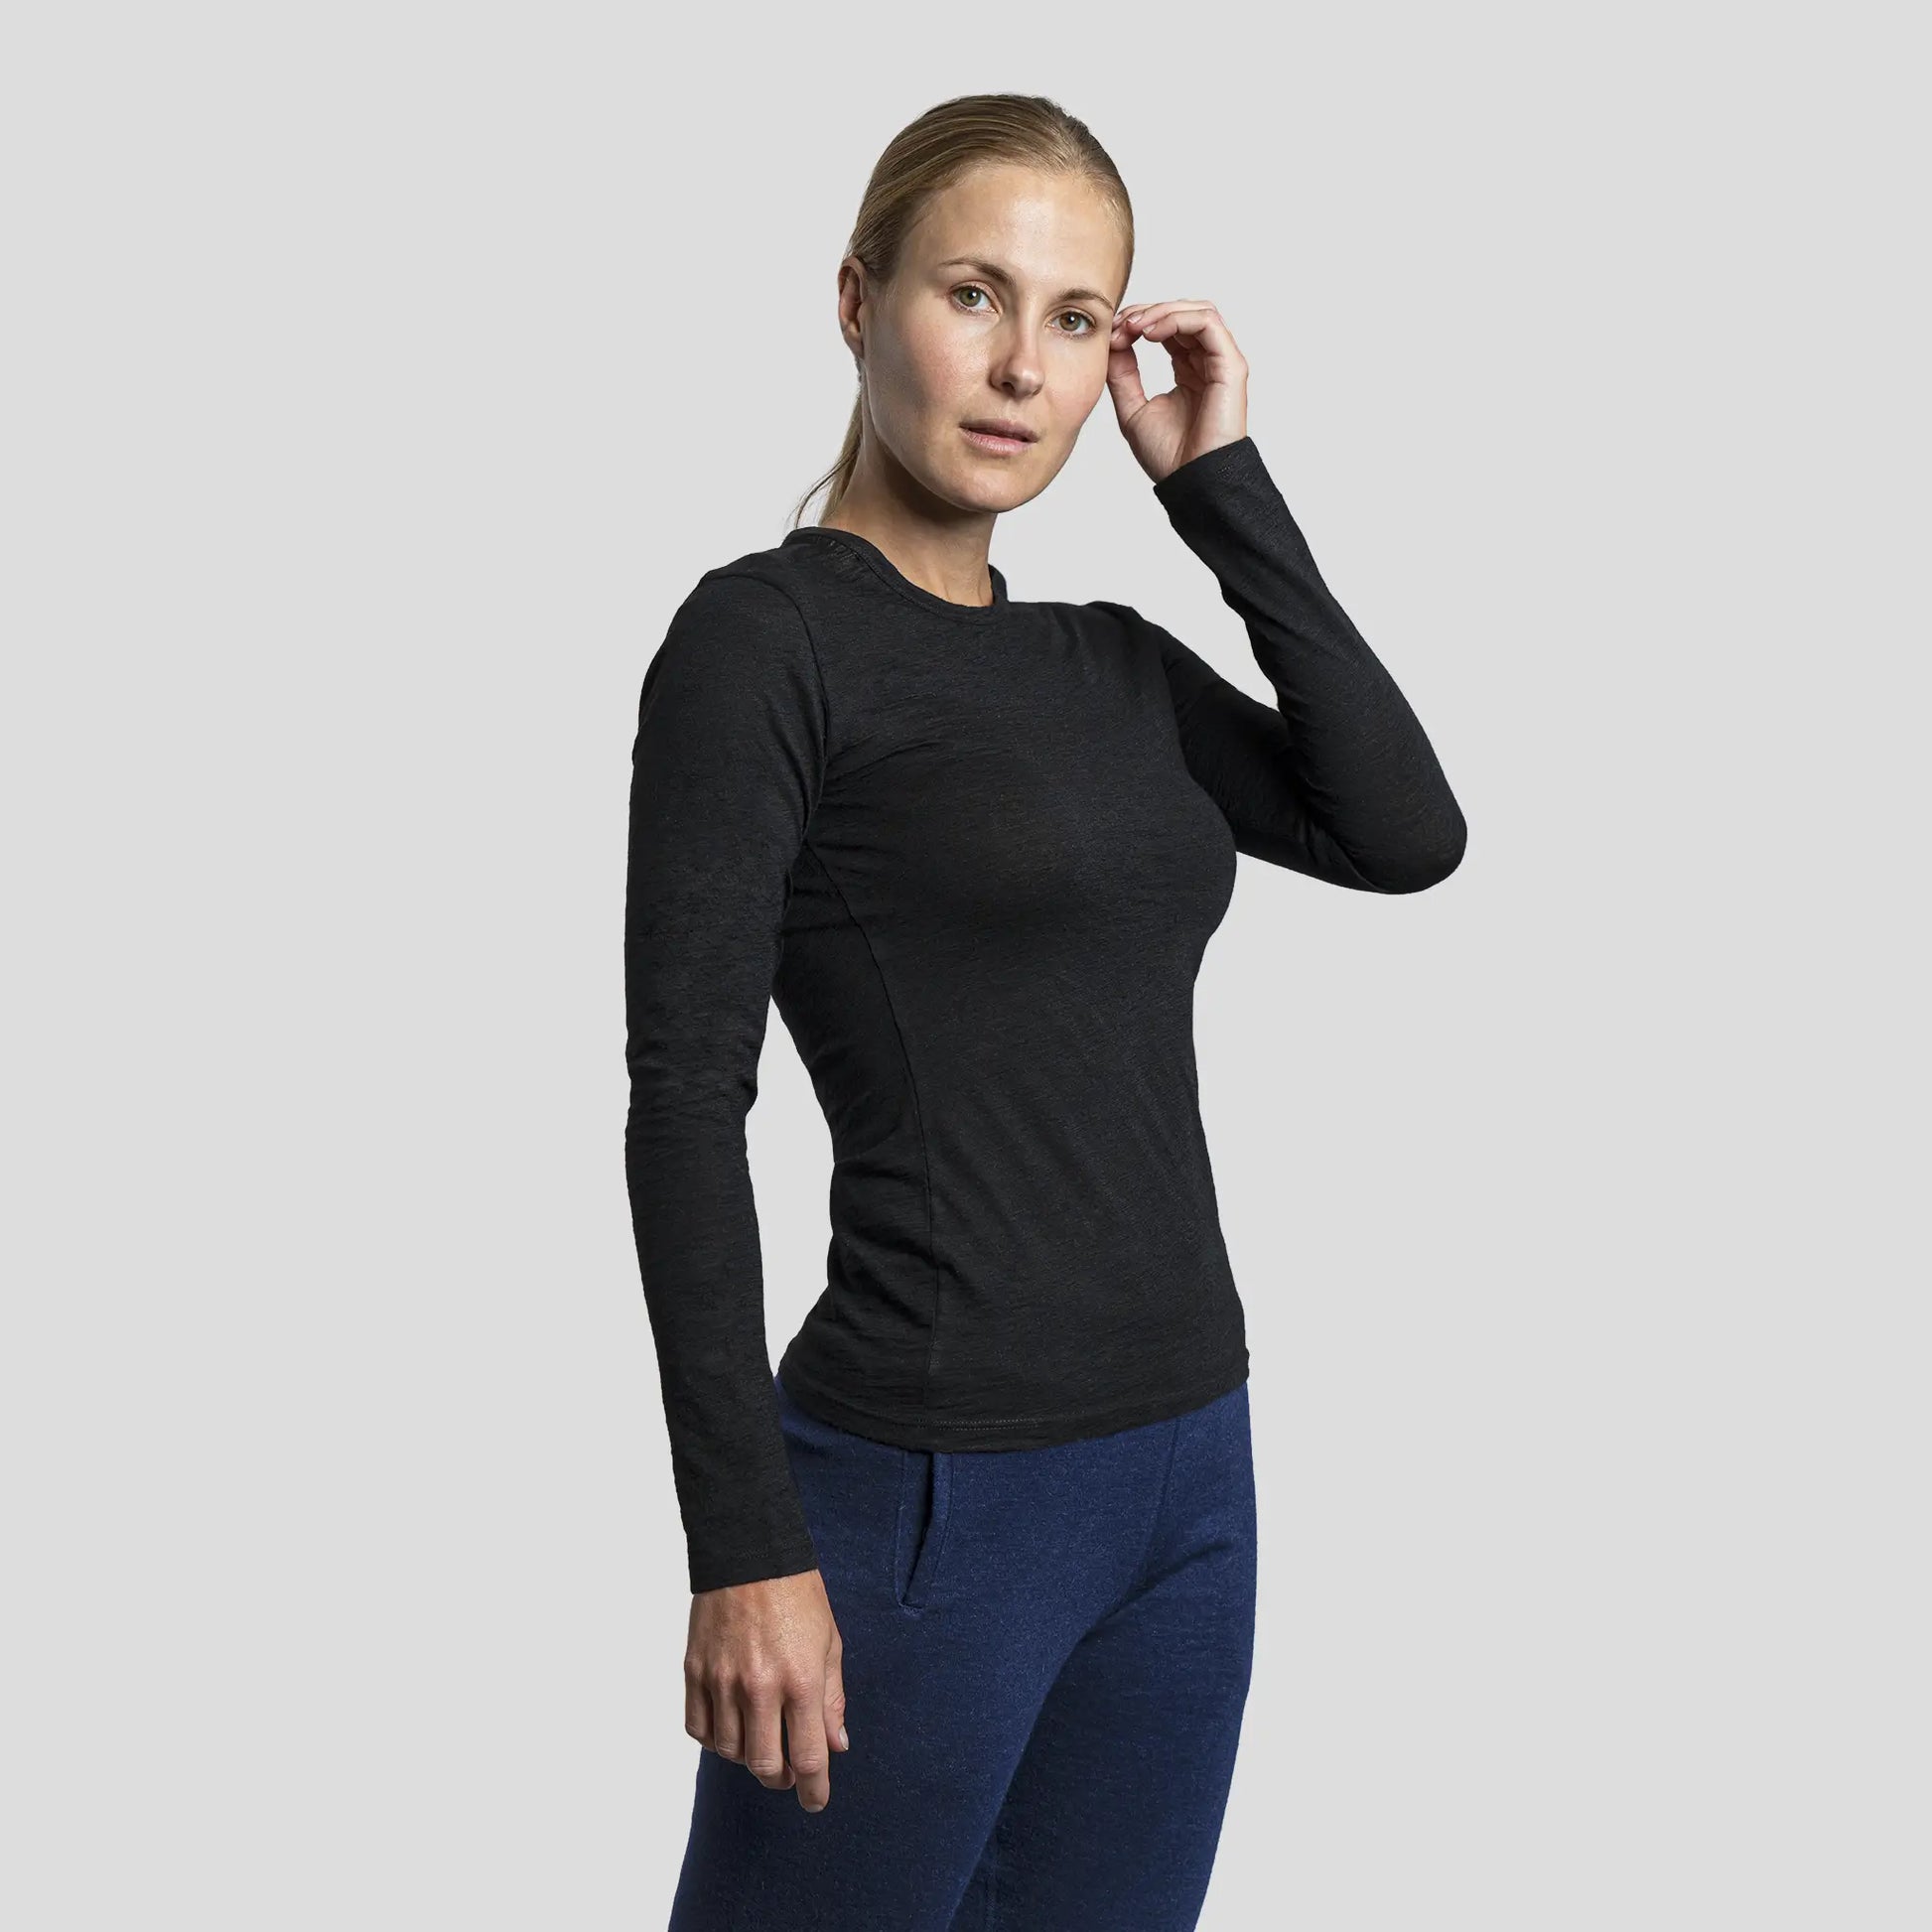 Women's Alpaca Wool Long Sleeve Base Layer: 160 Ultralight color Black